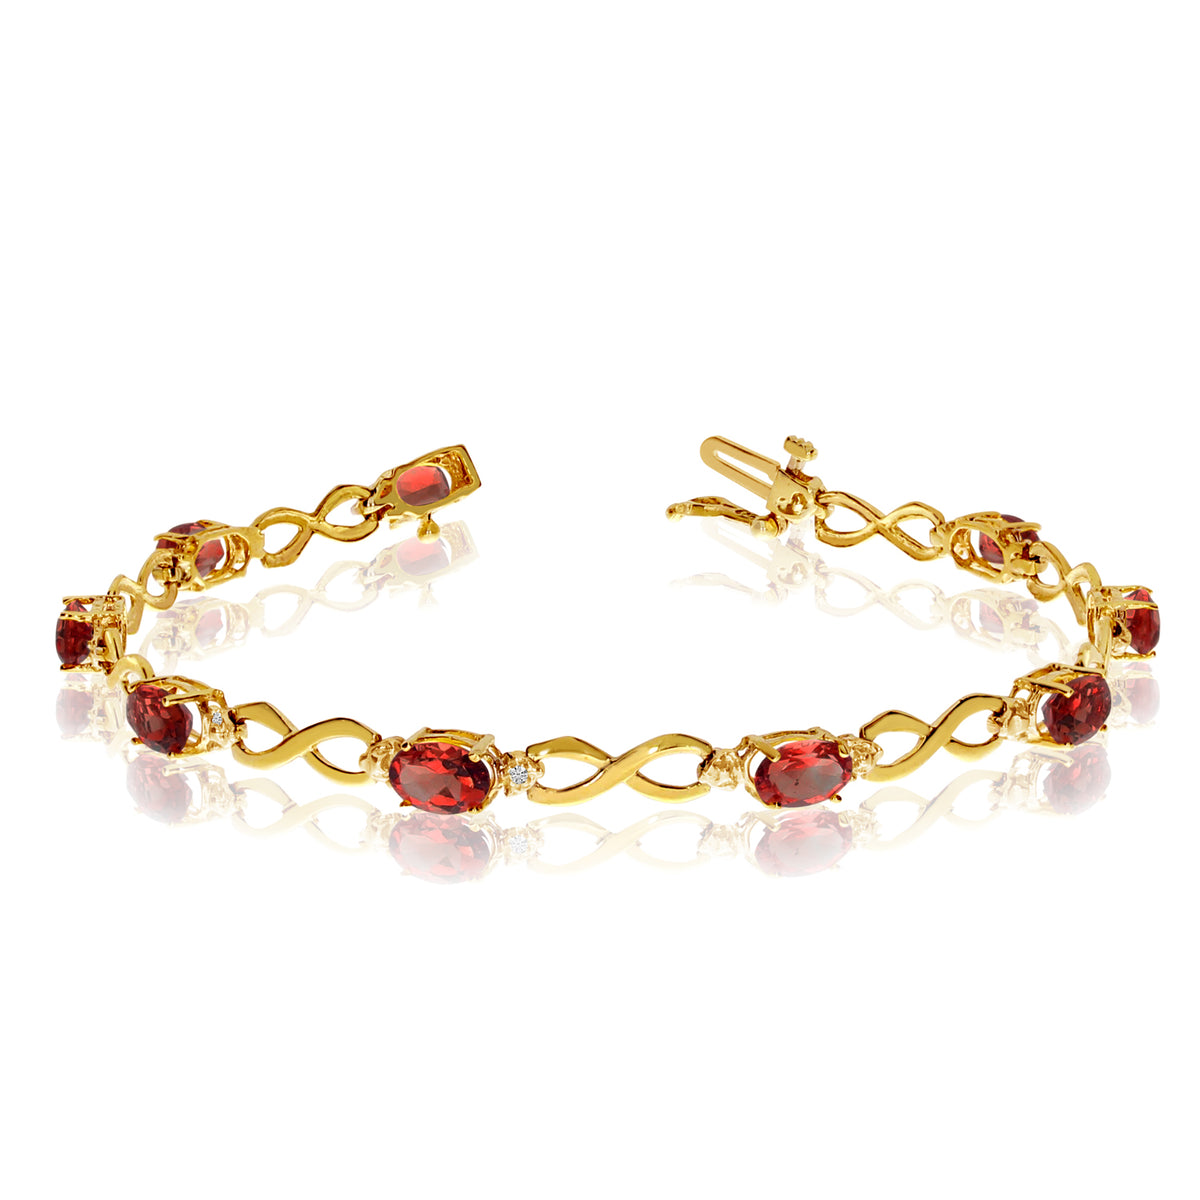 10K Yellow Gold Oval Garnet Stones And Diamonds Infinity Tennis Bracelet, 7" fine designer jewelry for men and women